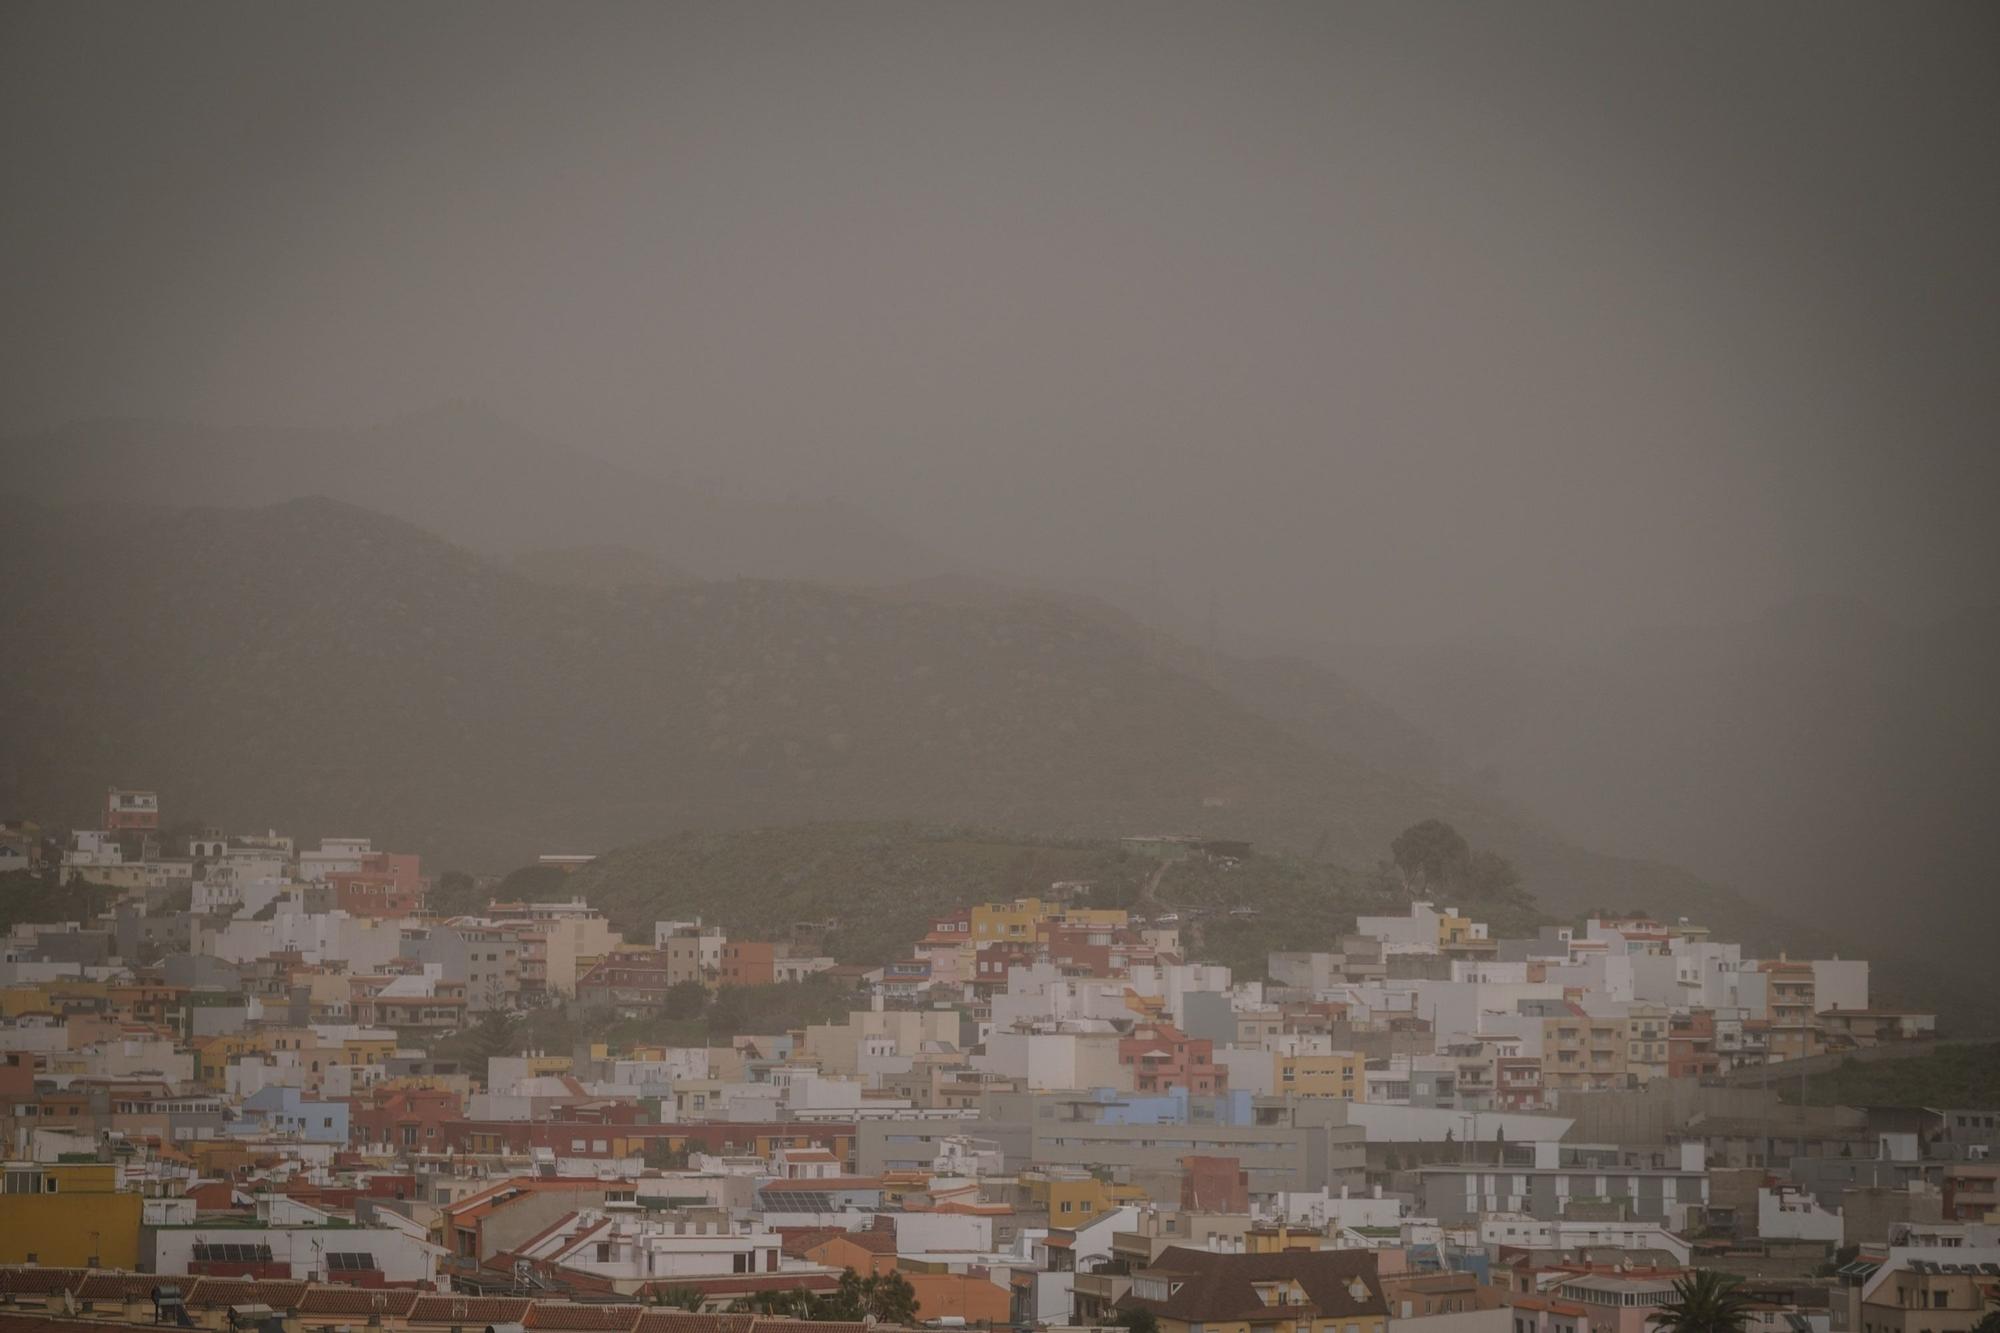 La calima 'esconde' Tenerife